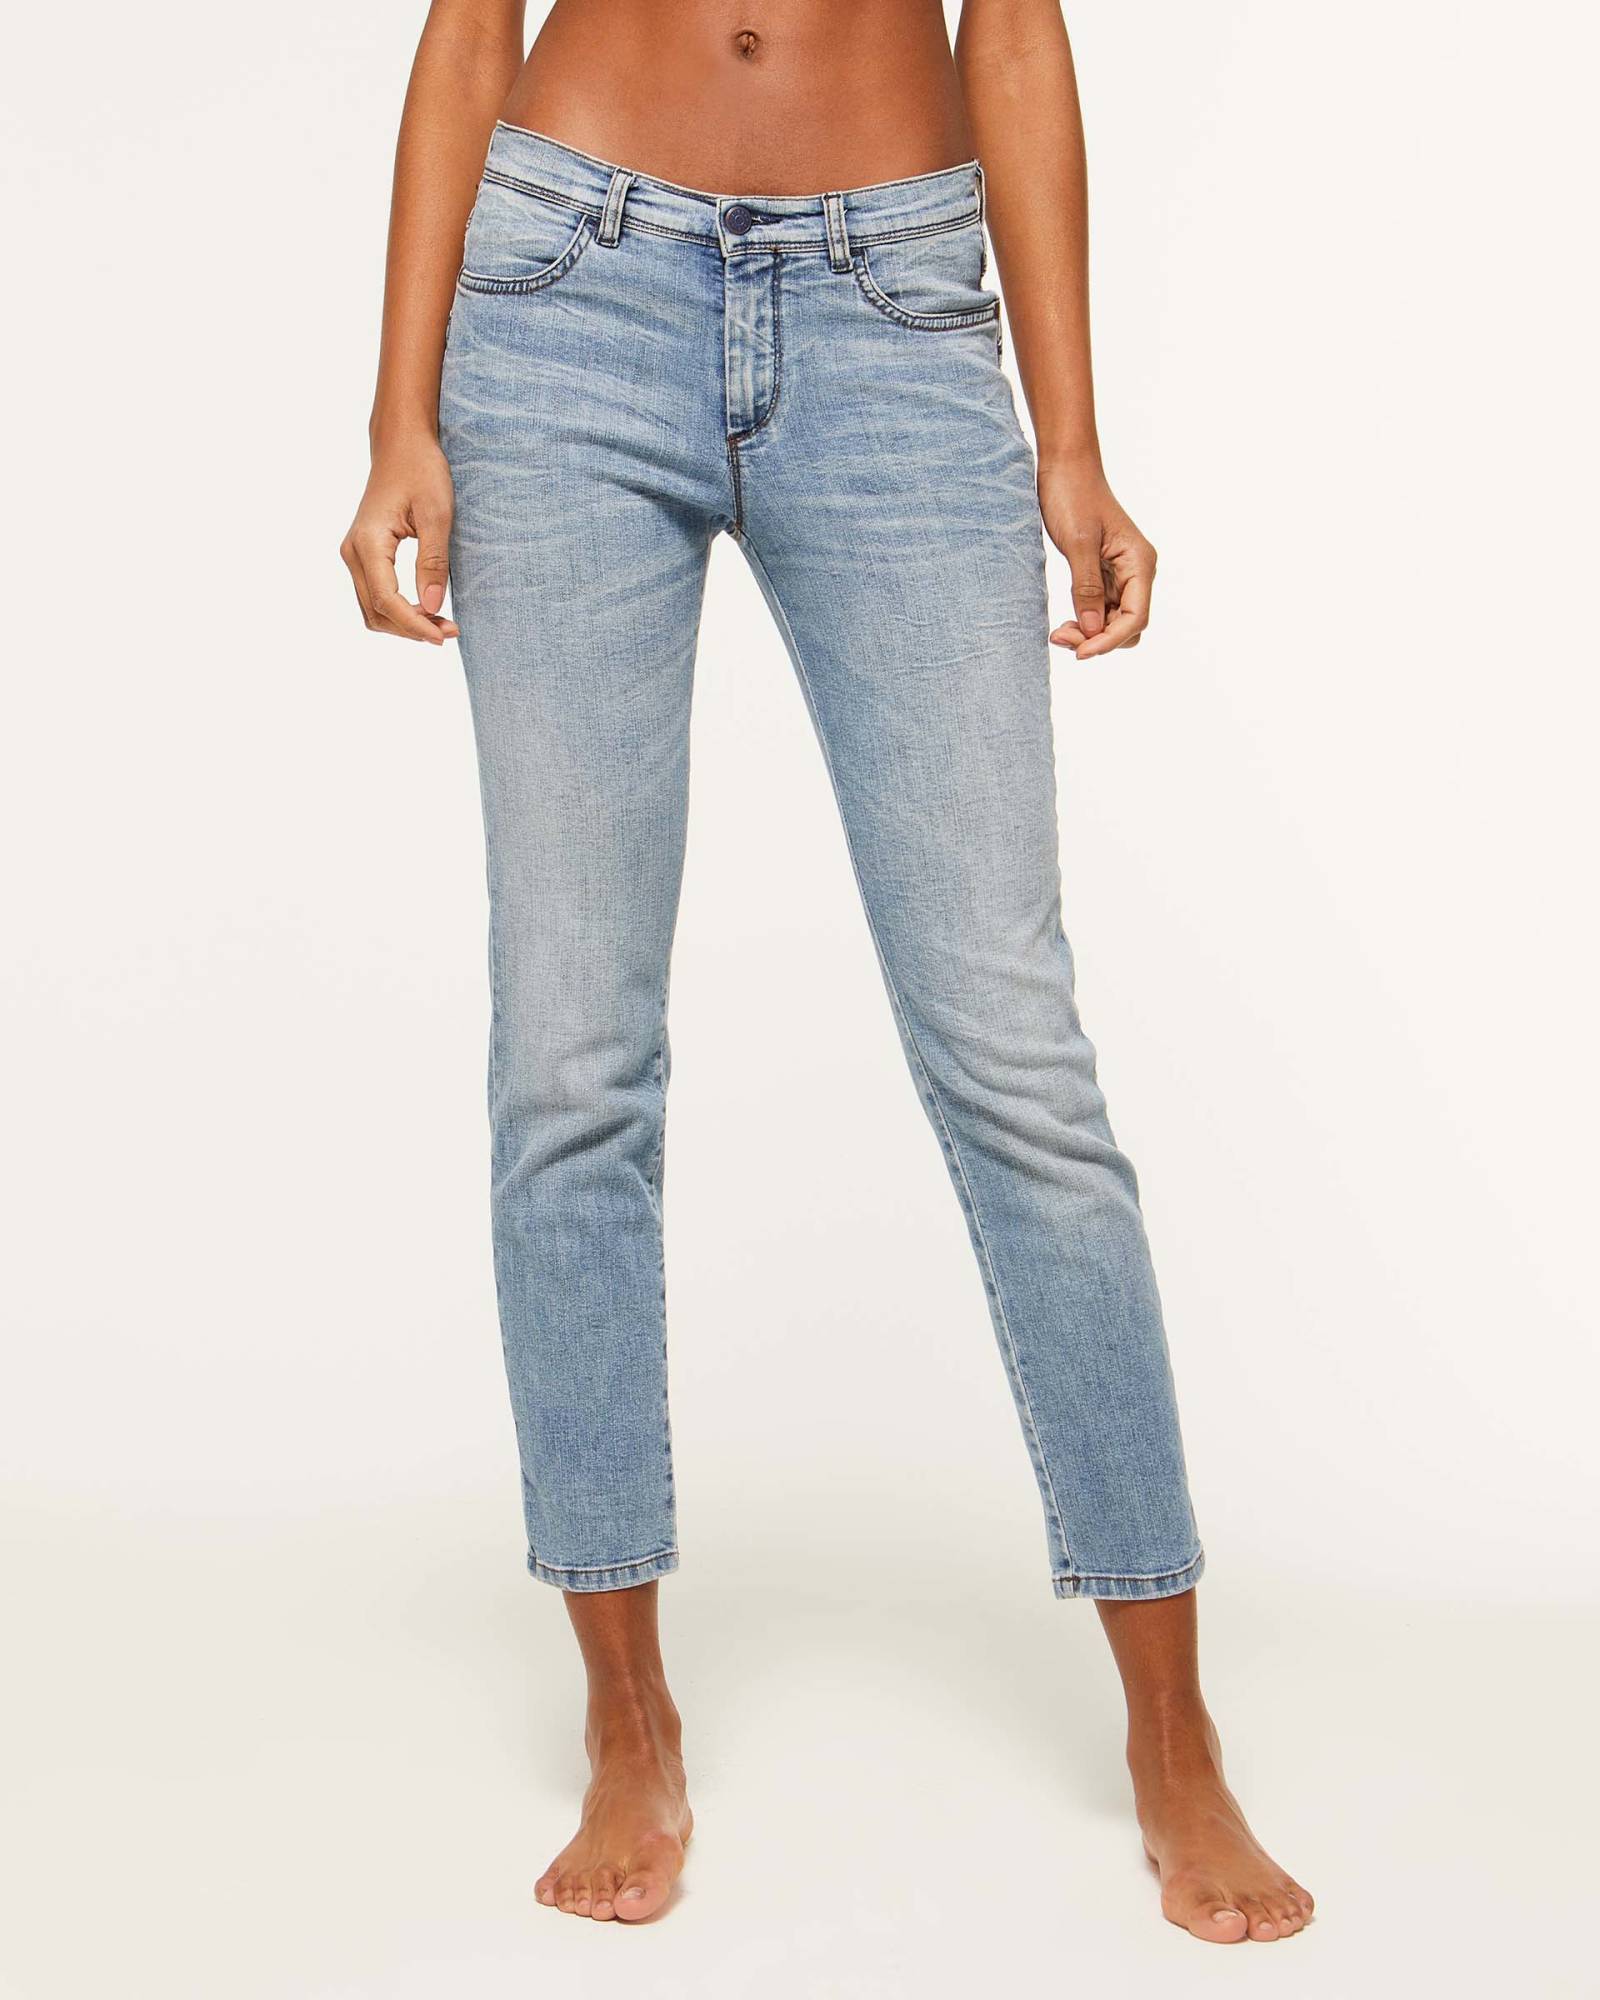 Jeans slim fit Sisley a 59,95 euro